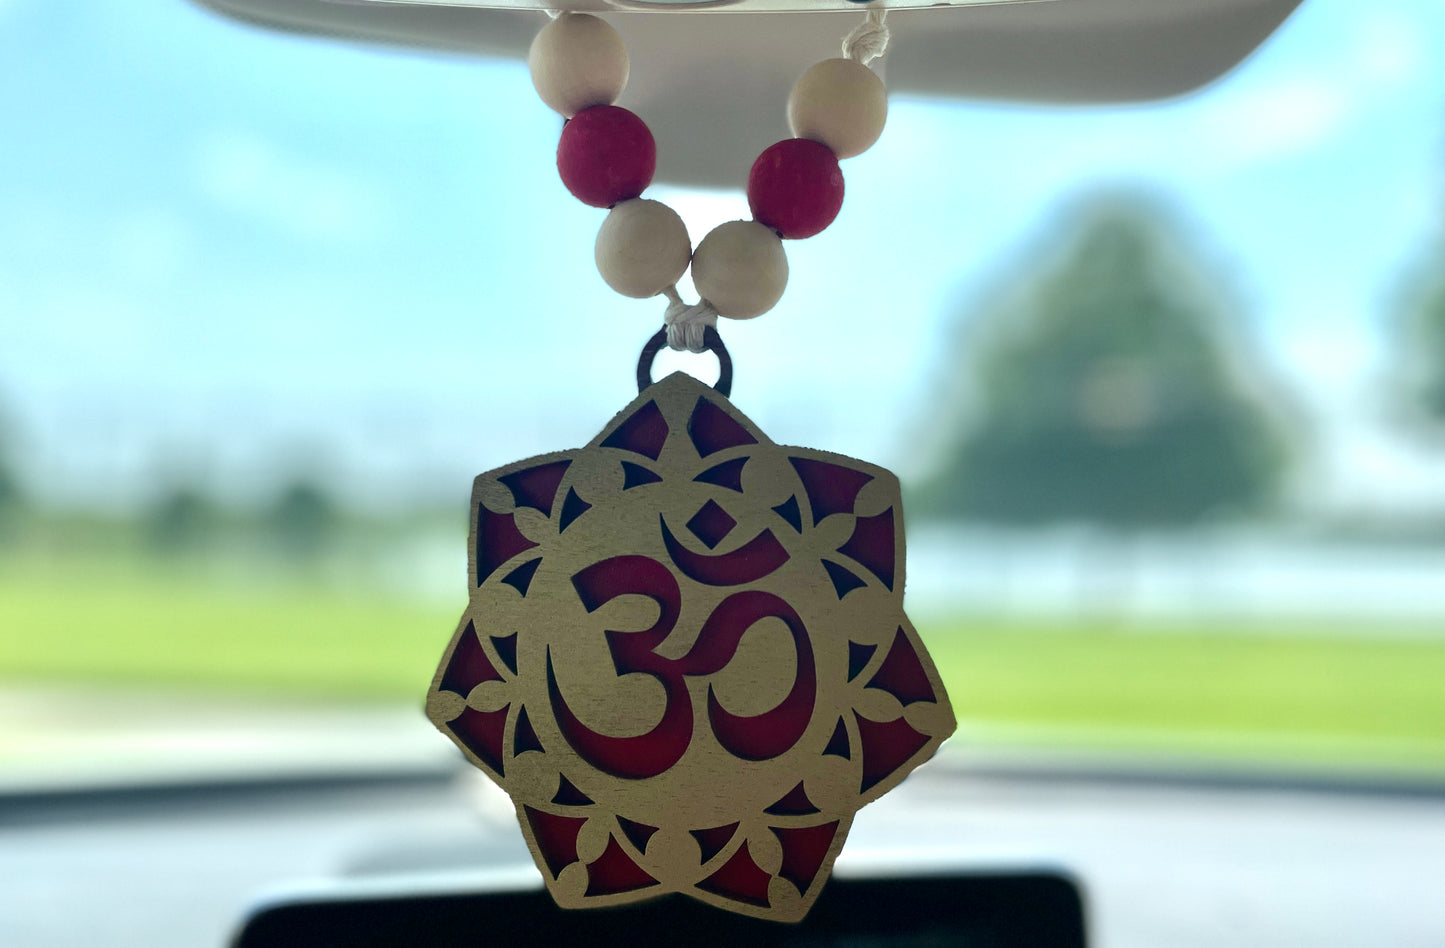 Shiva (OM) car mirror charm and home decor item